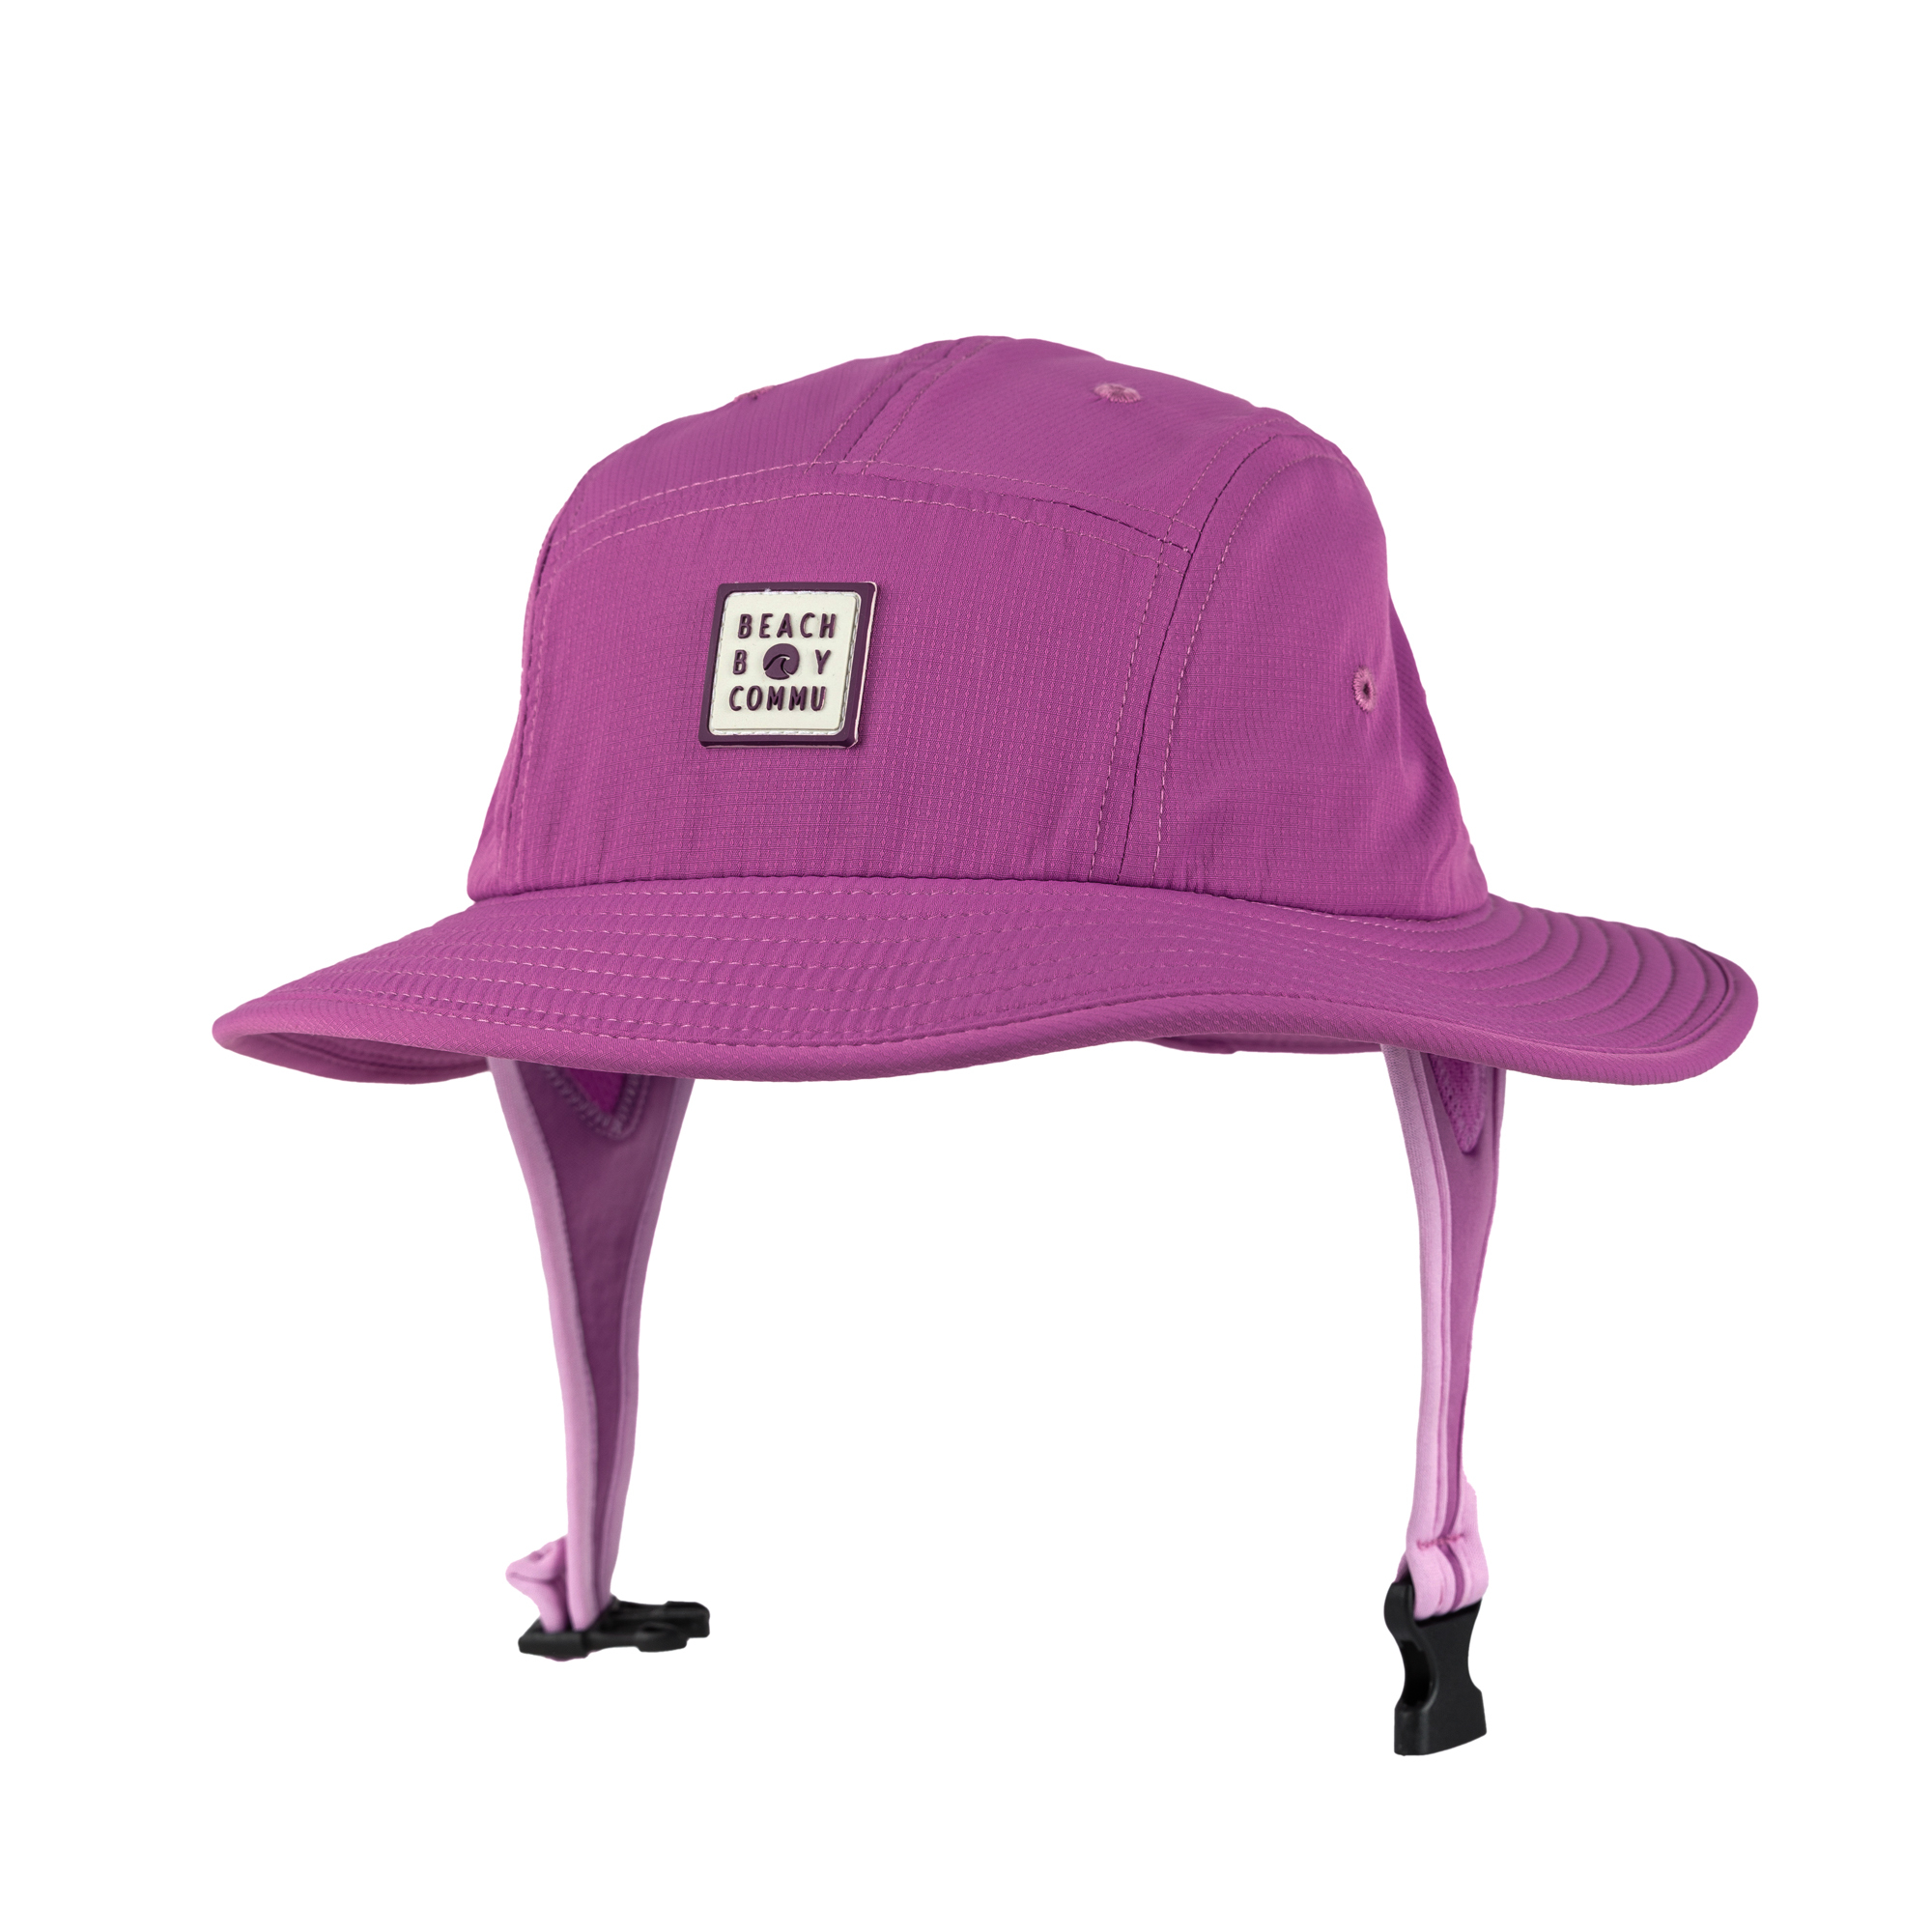 薰衣草紫色衝浪帽:潛水帽 purple lavender surf hat-2